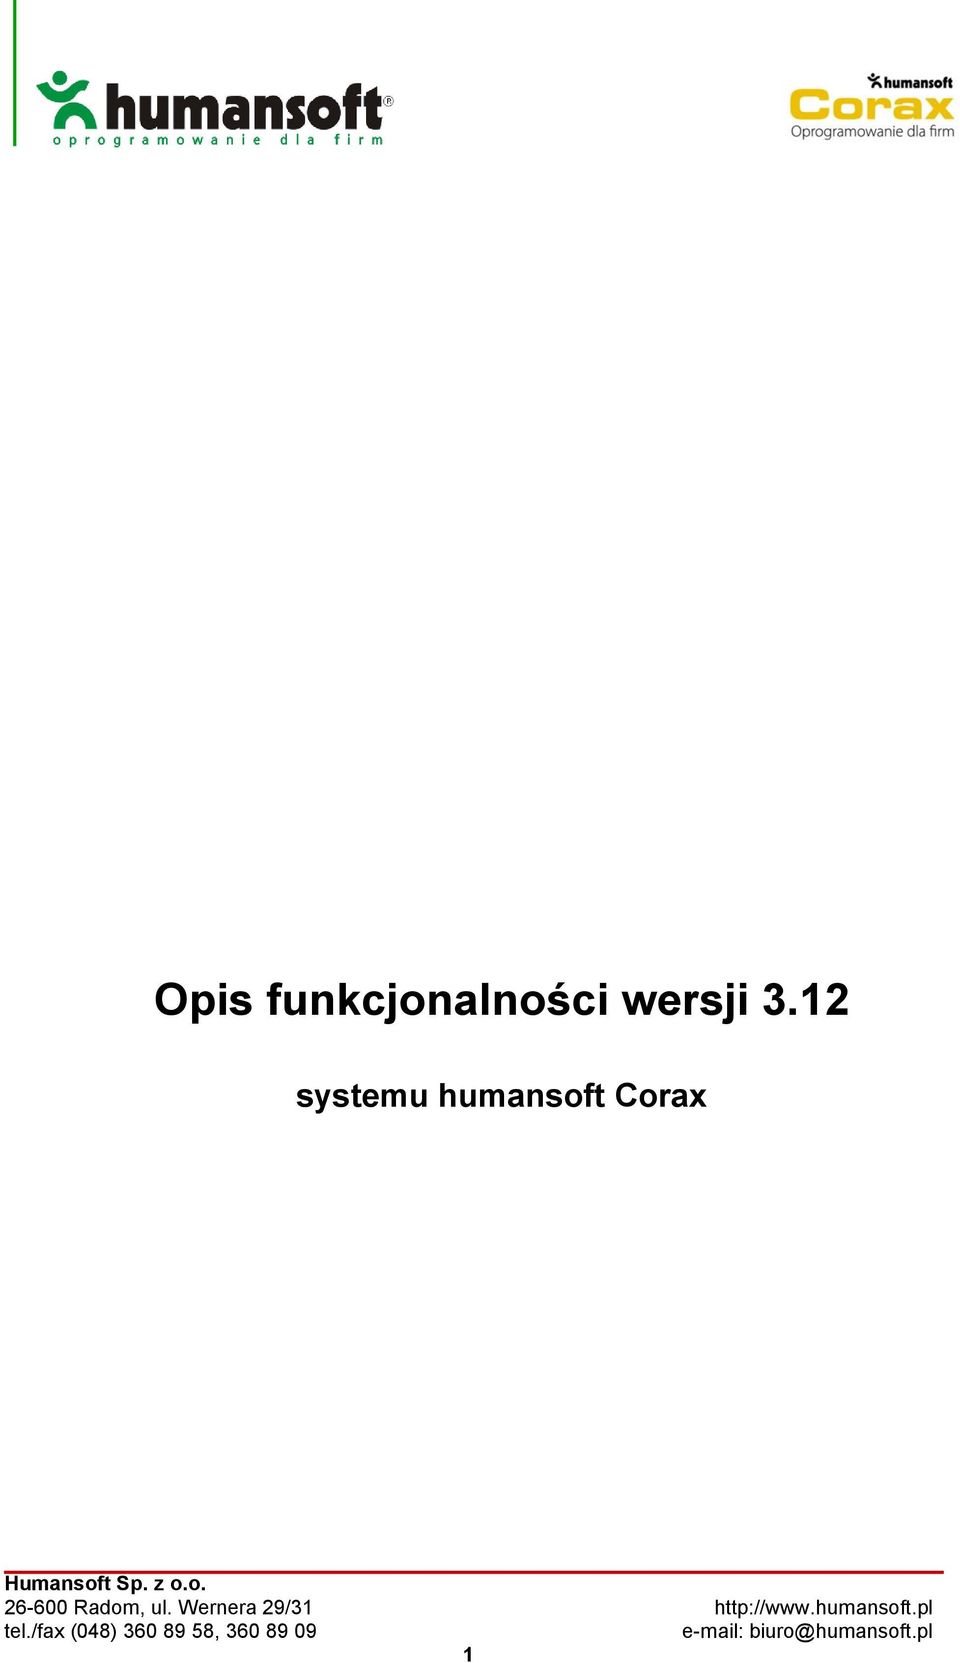 Wernera 29/31 http://www.humansoft.pl tel.